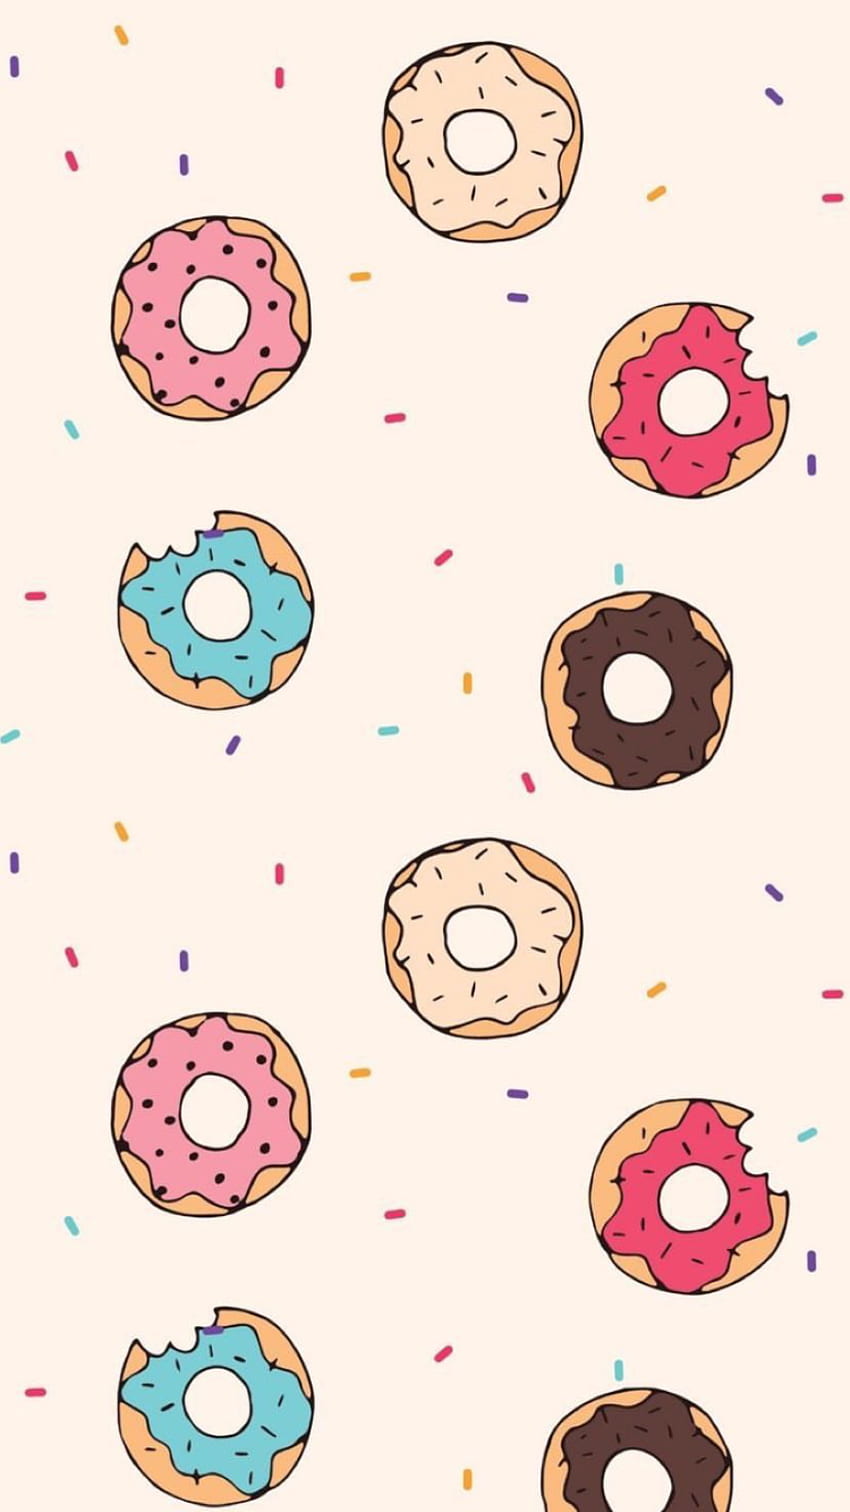 Cute ios 163 Wallpapers  Sleeping Donut Wallpaper  Idea Wallpapers   iPhone WallpapersColor Schemes